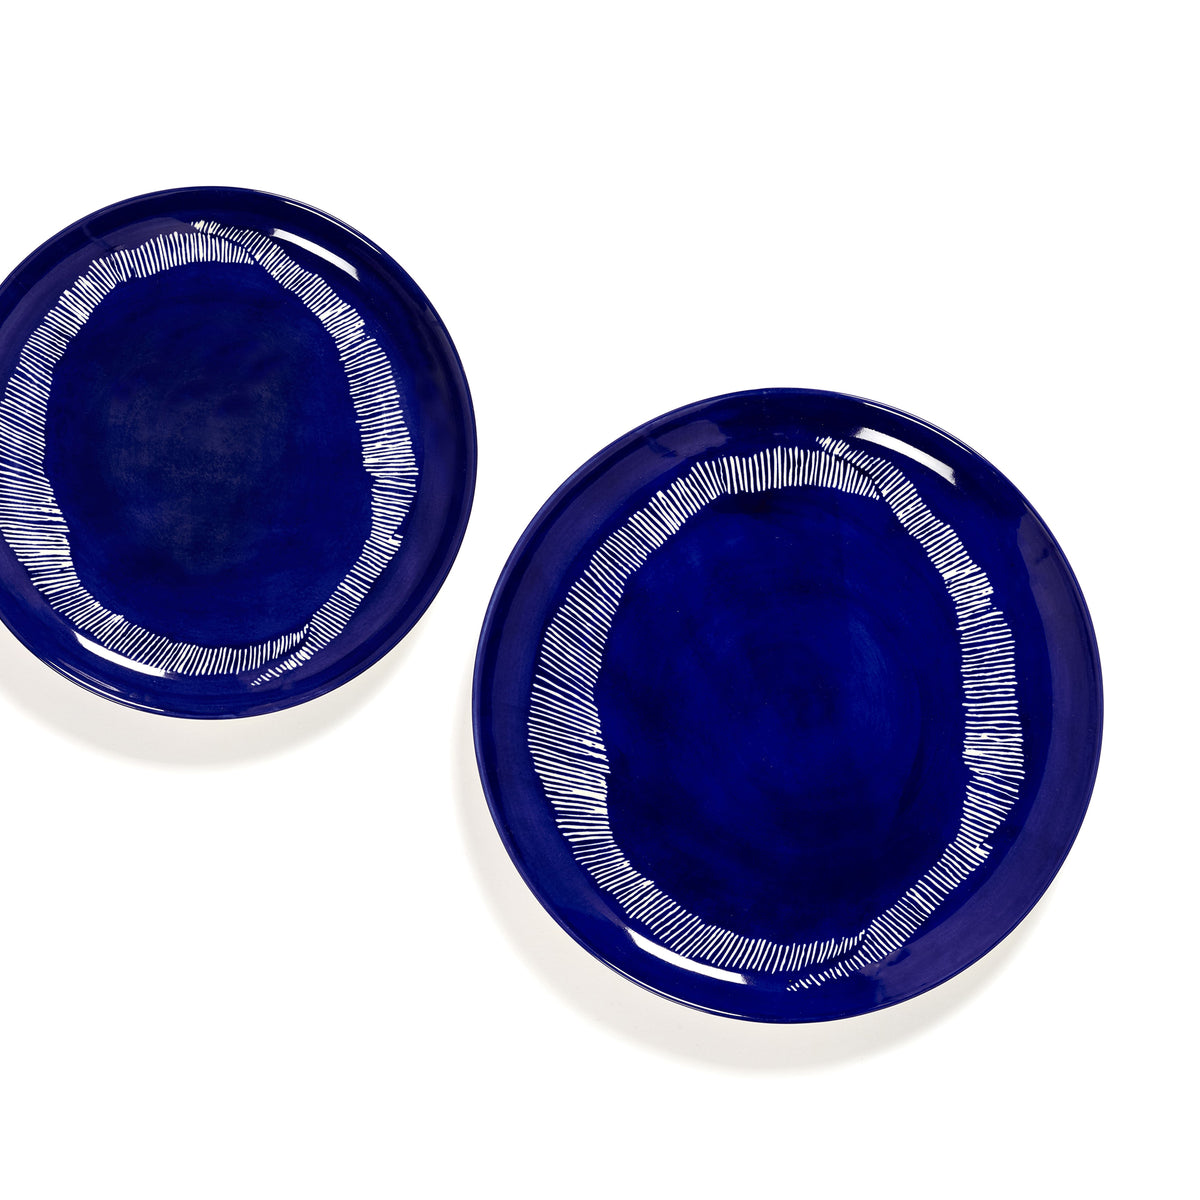 Lapis Lazuli Plate with White Stripes - L